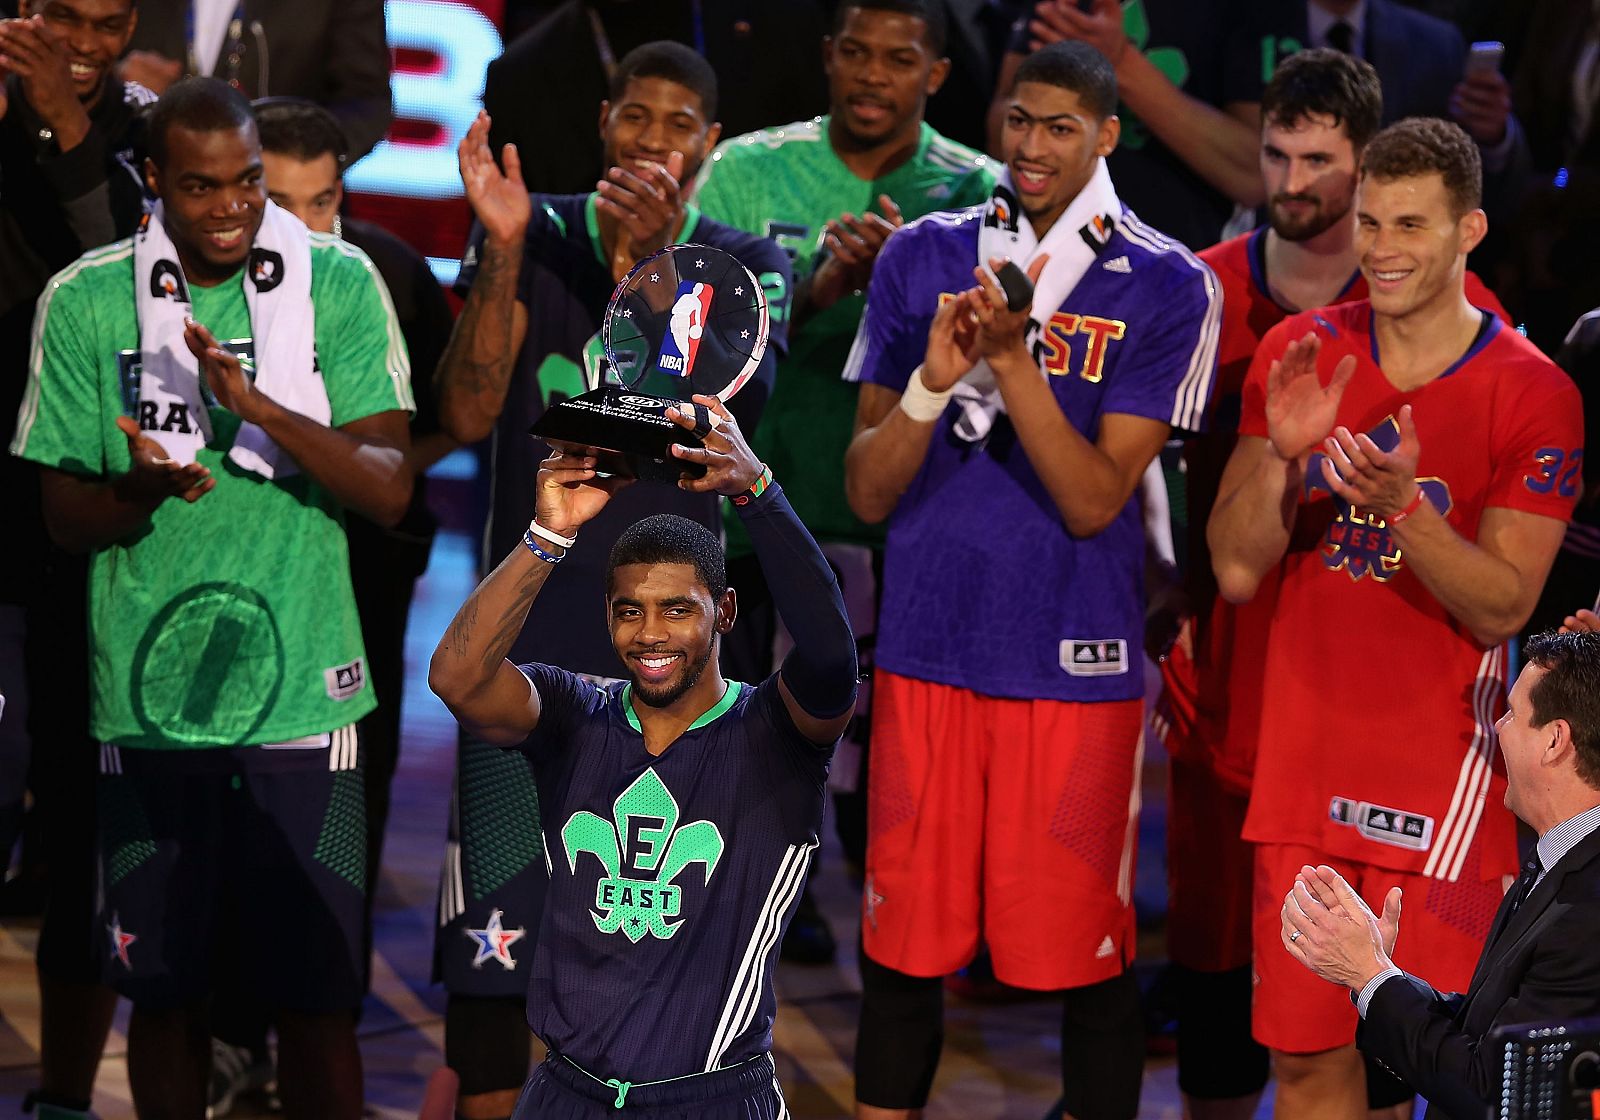 NBA All-Star Game 2014